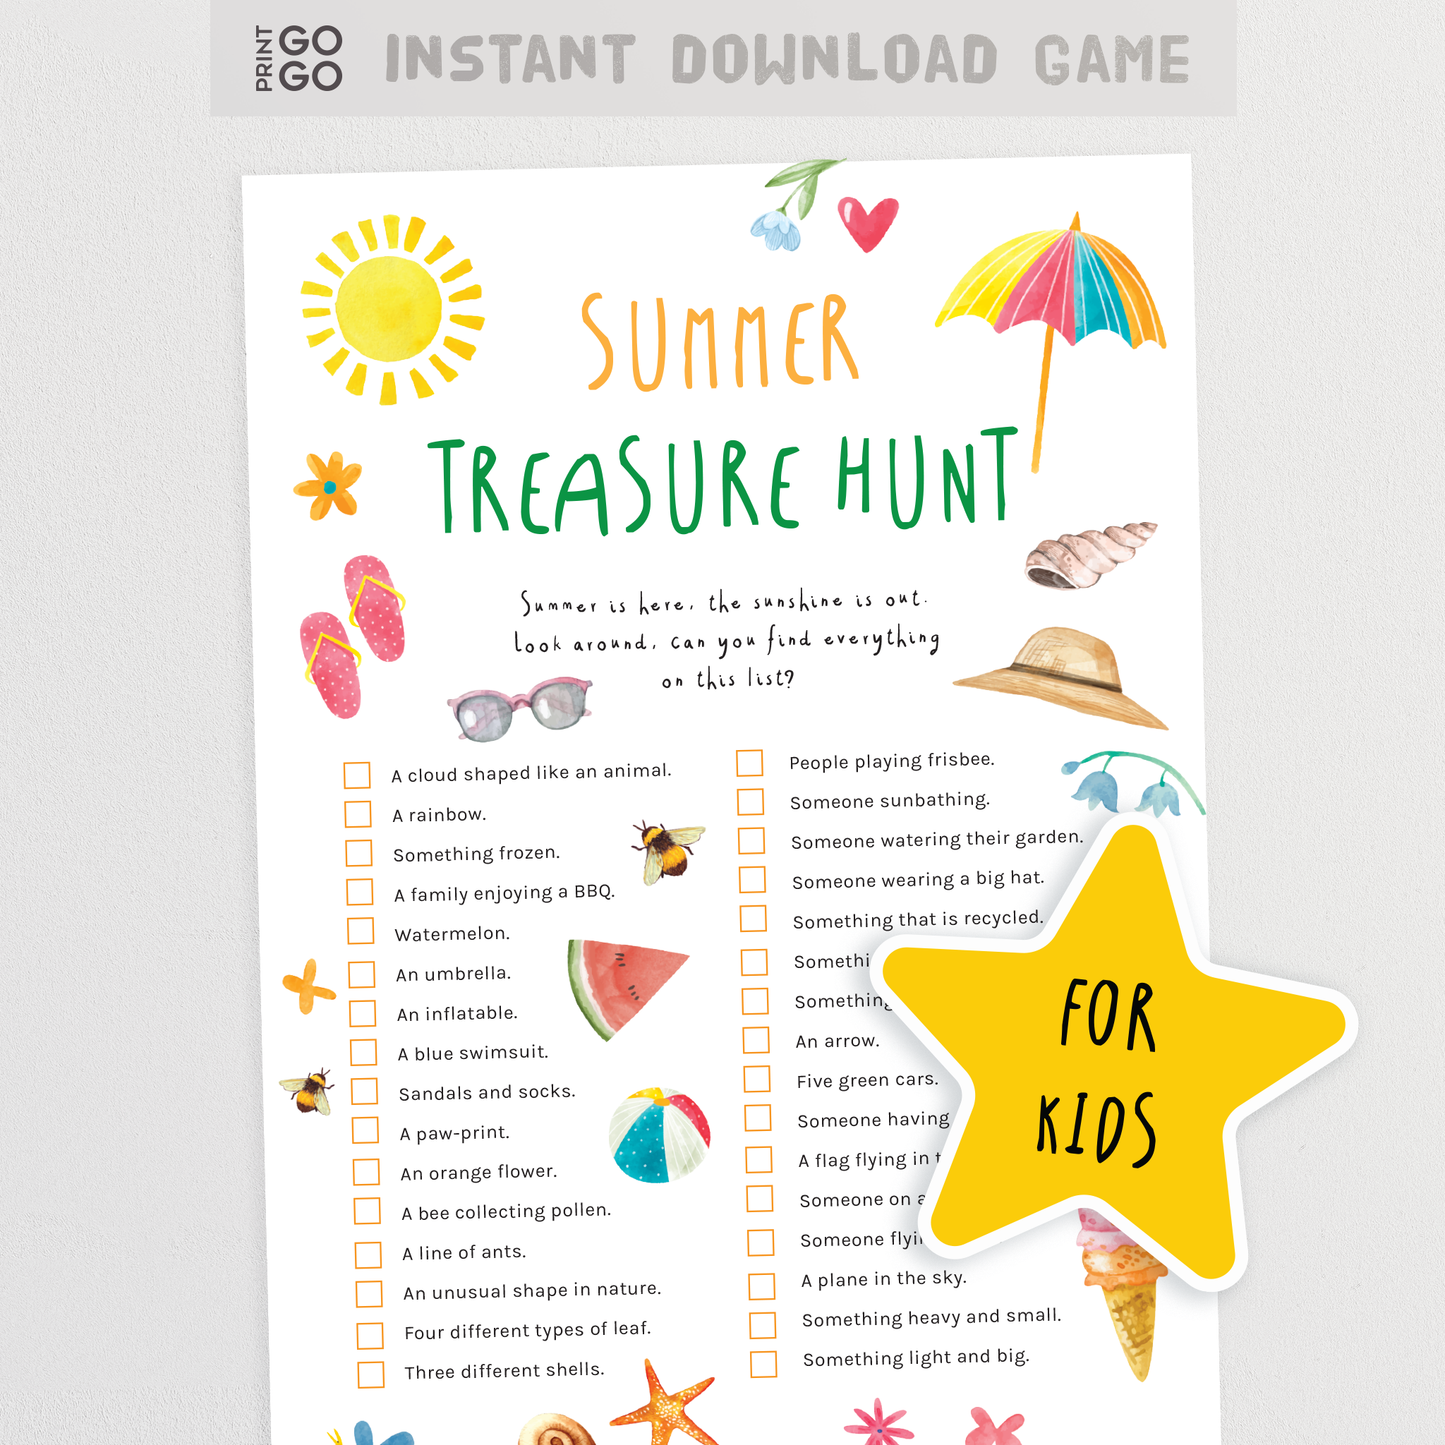 Summer Treasure Hunt for Kids